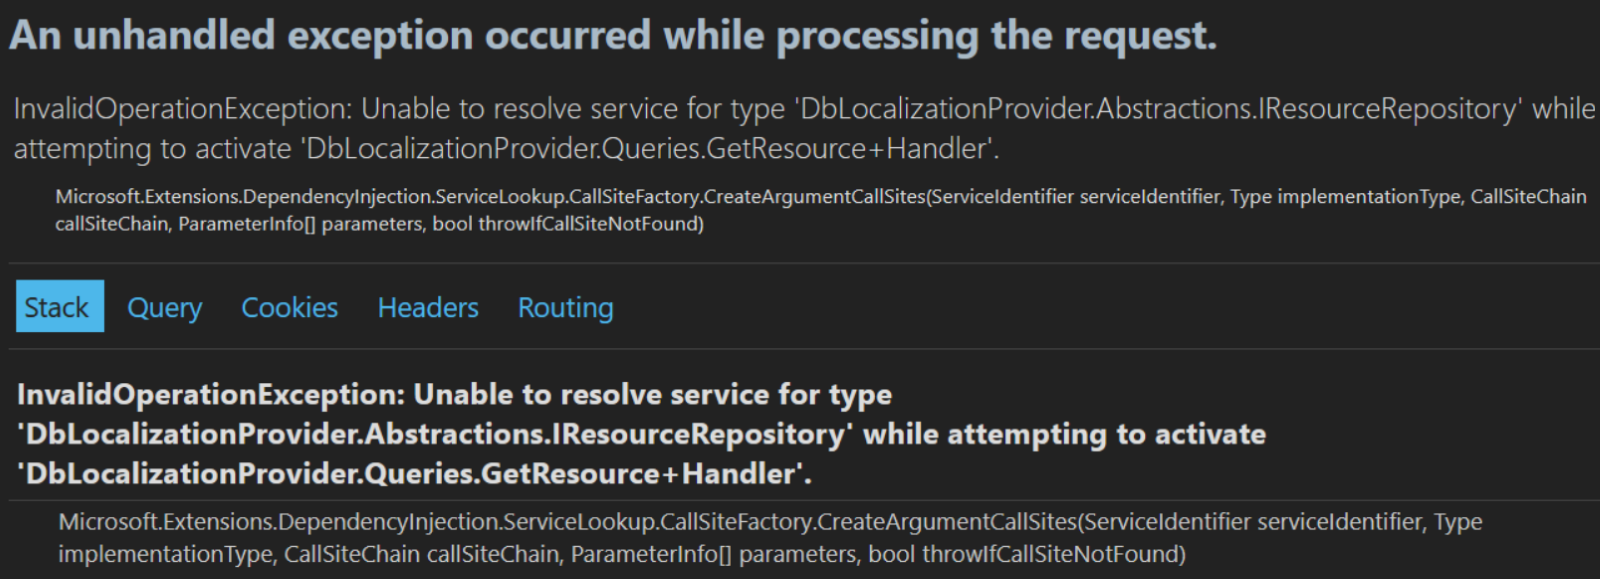 A screenshot of a computer error

Description automatically generated